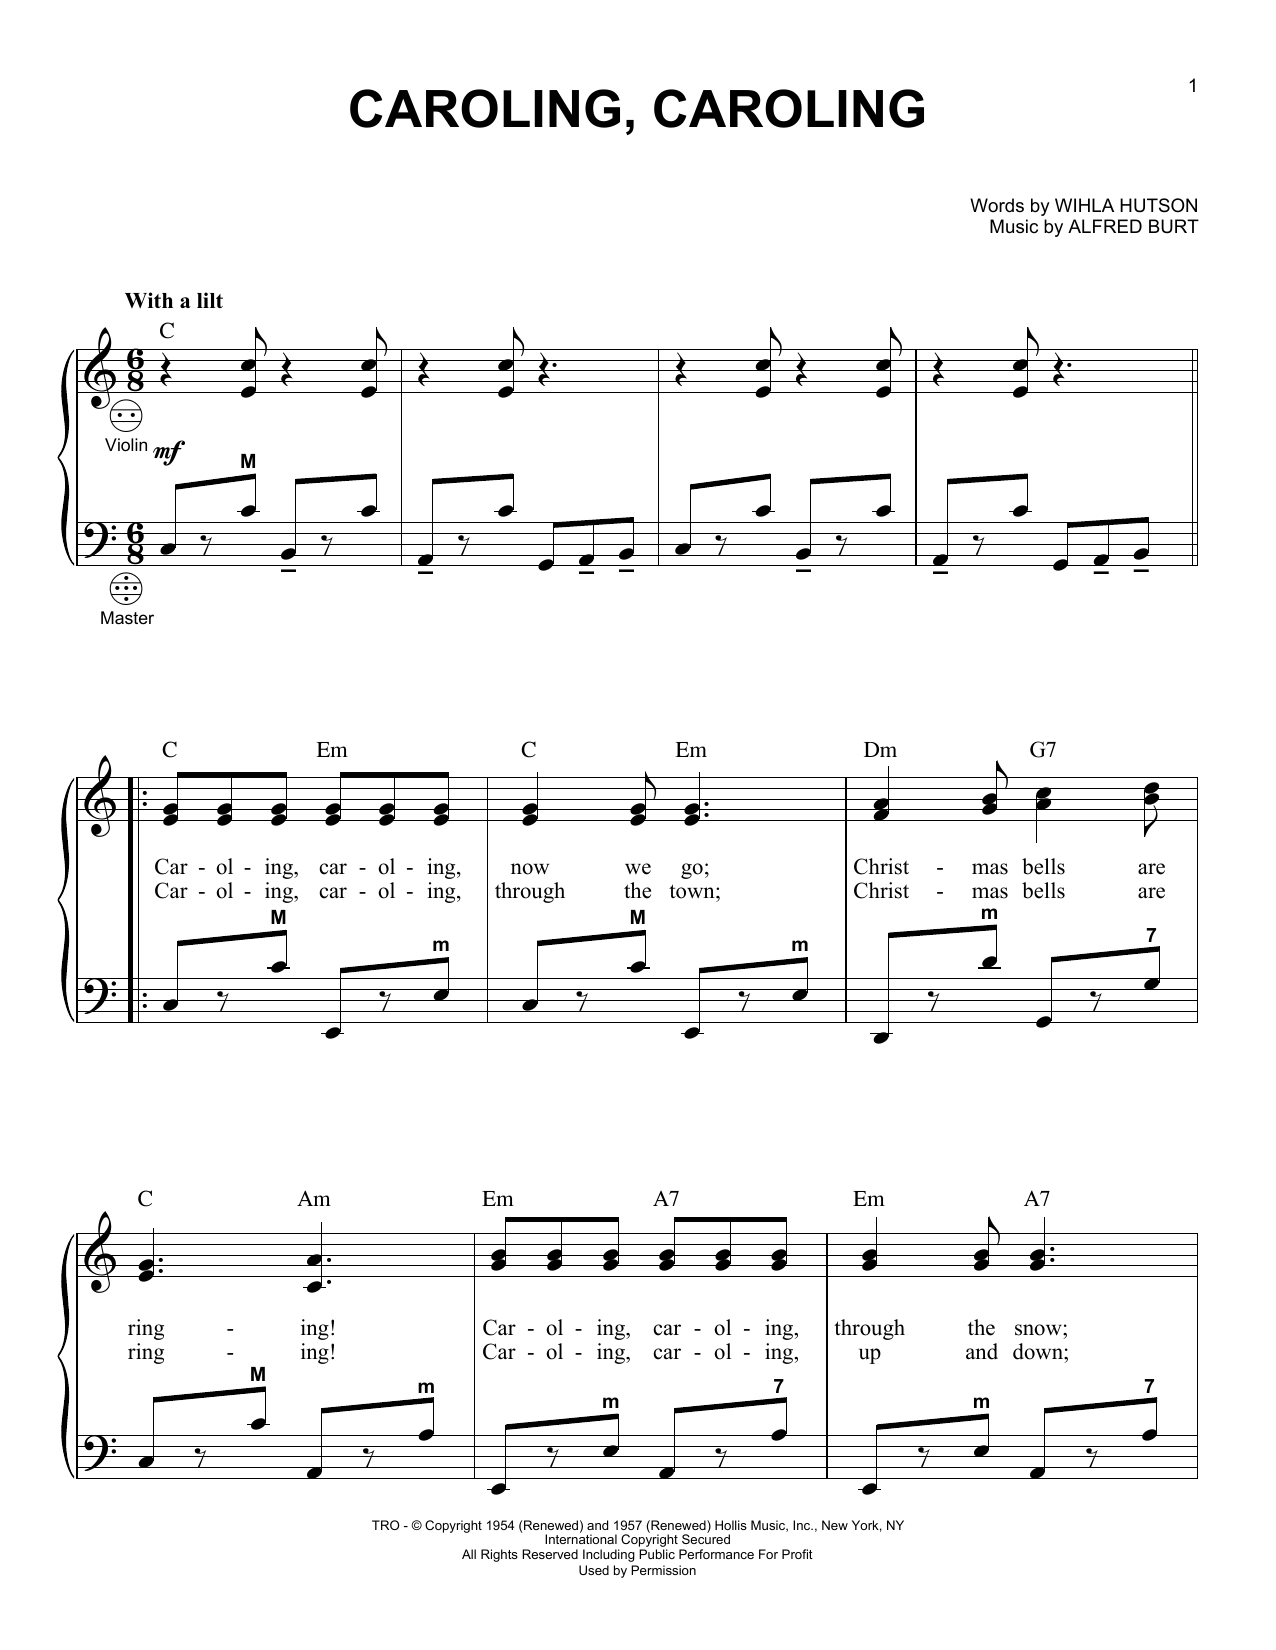 Download Alfred Burt Caroling, Caroling Sheet Music and learn how to play Guitar Tab PDF digital score in minutes